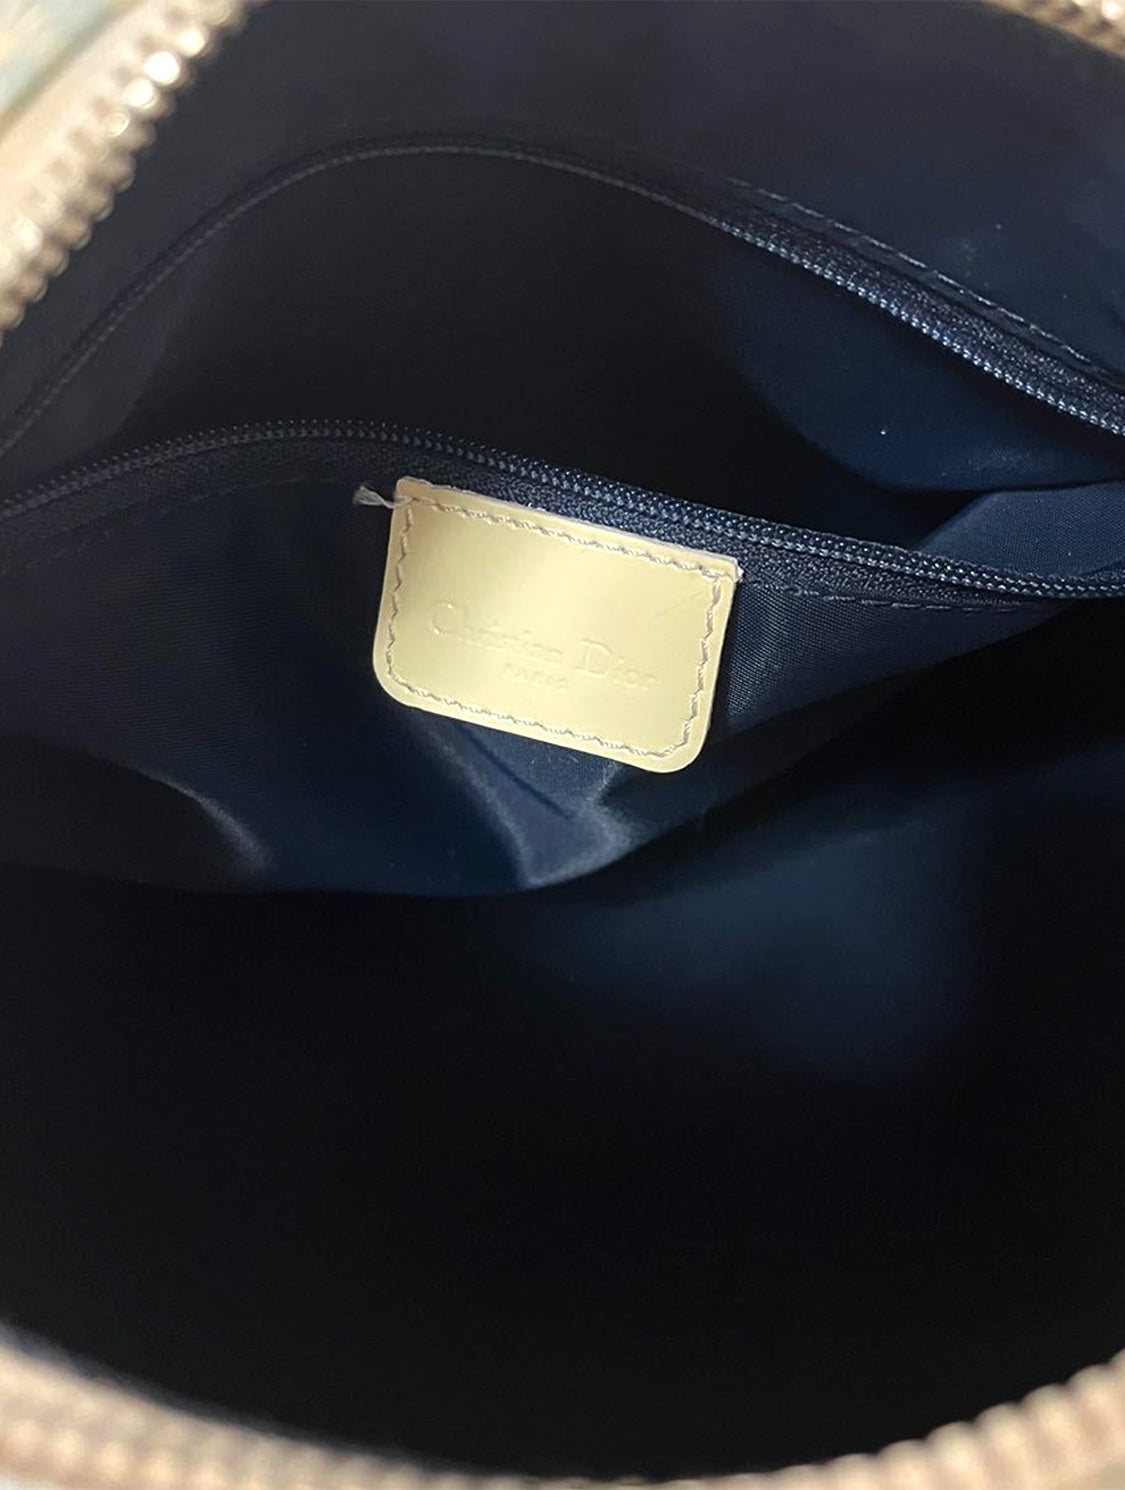 Christian Dior 2000s Navy Blue Trotter Monogram Boston Bag · INTO